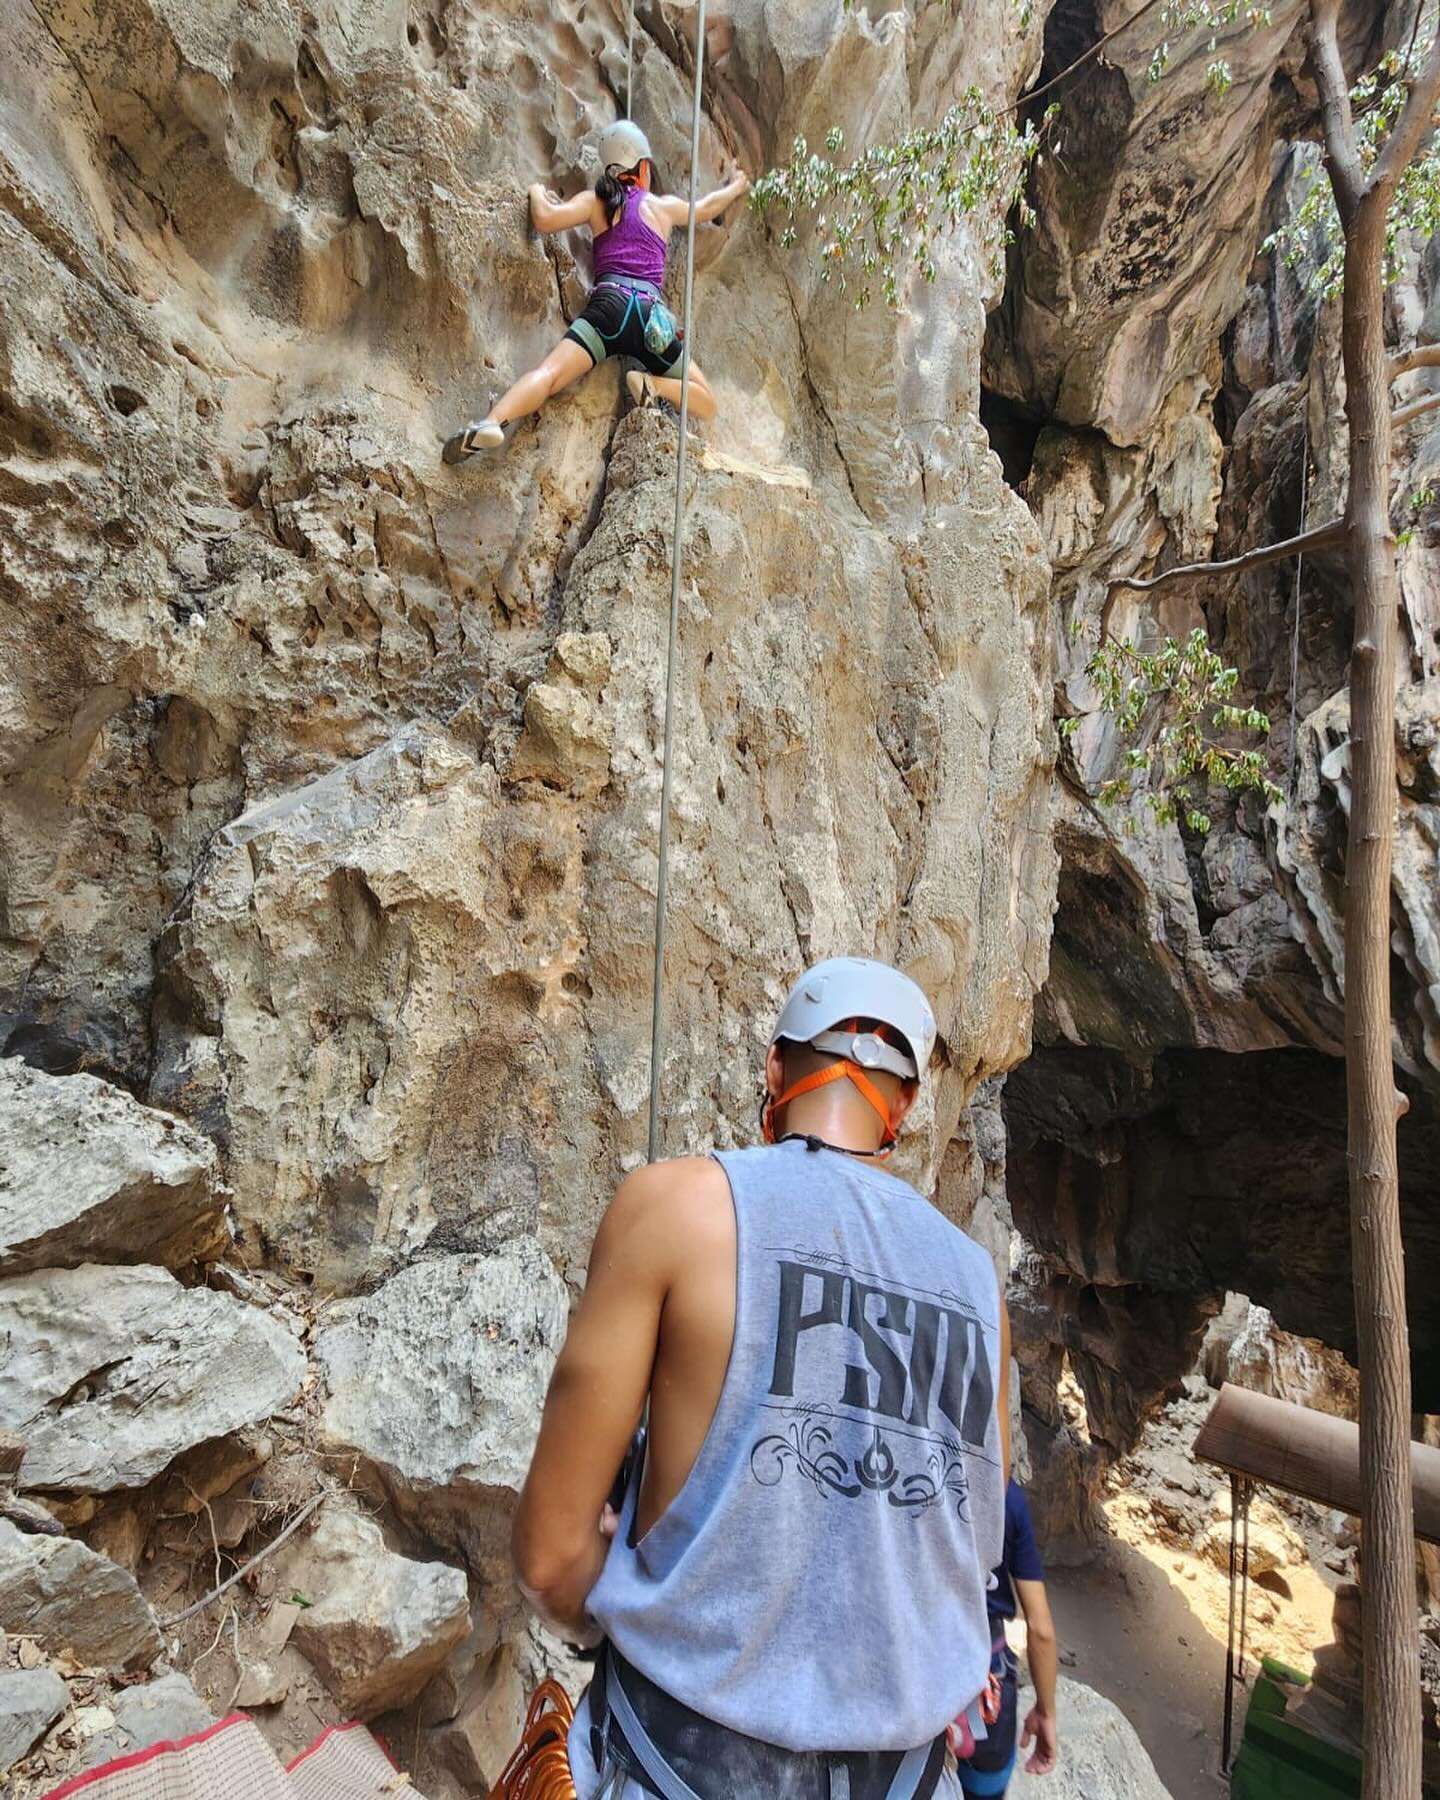 Bean Cow staff outdoor climbing trip 🤩 work hard play hard 💪
📍khao yoi cave